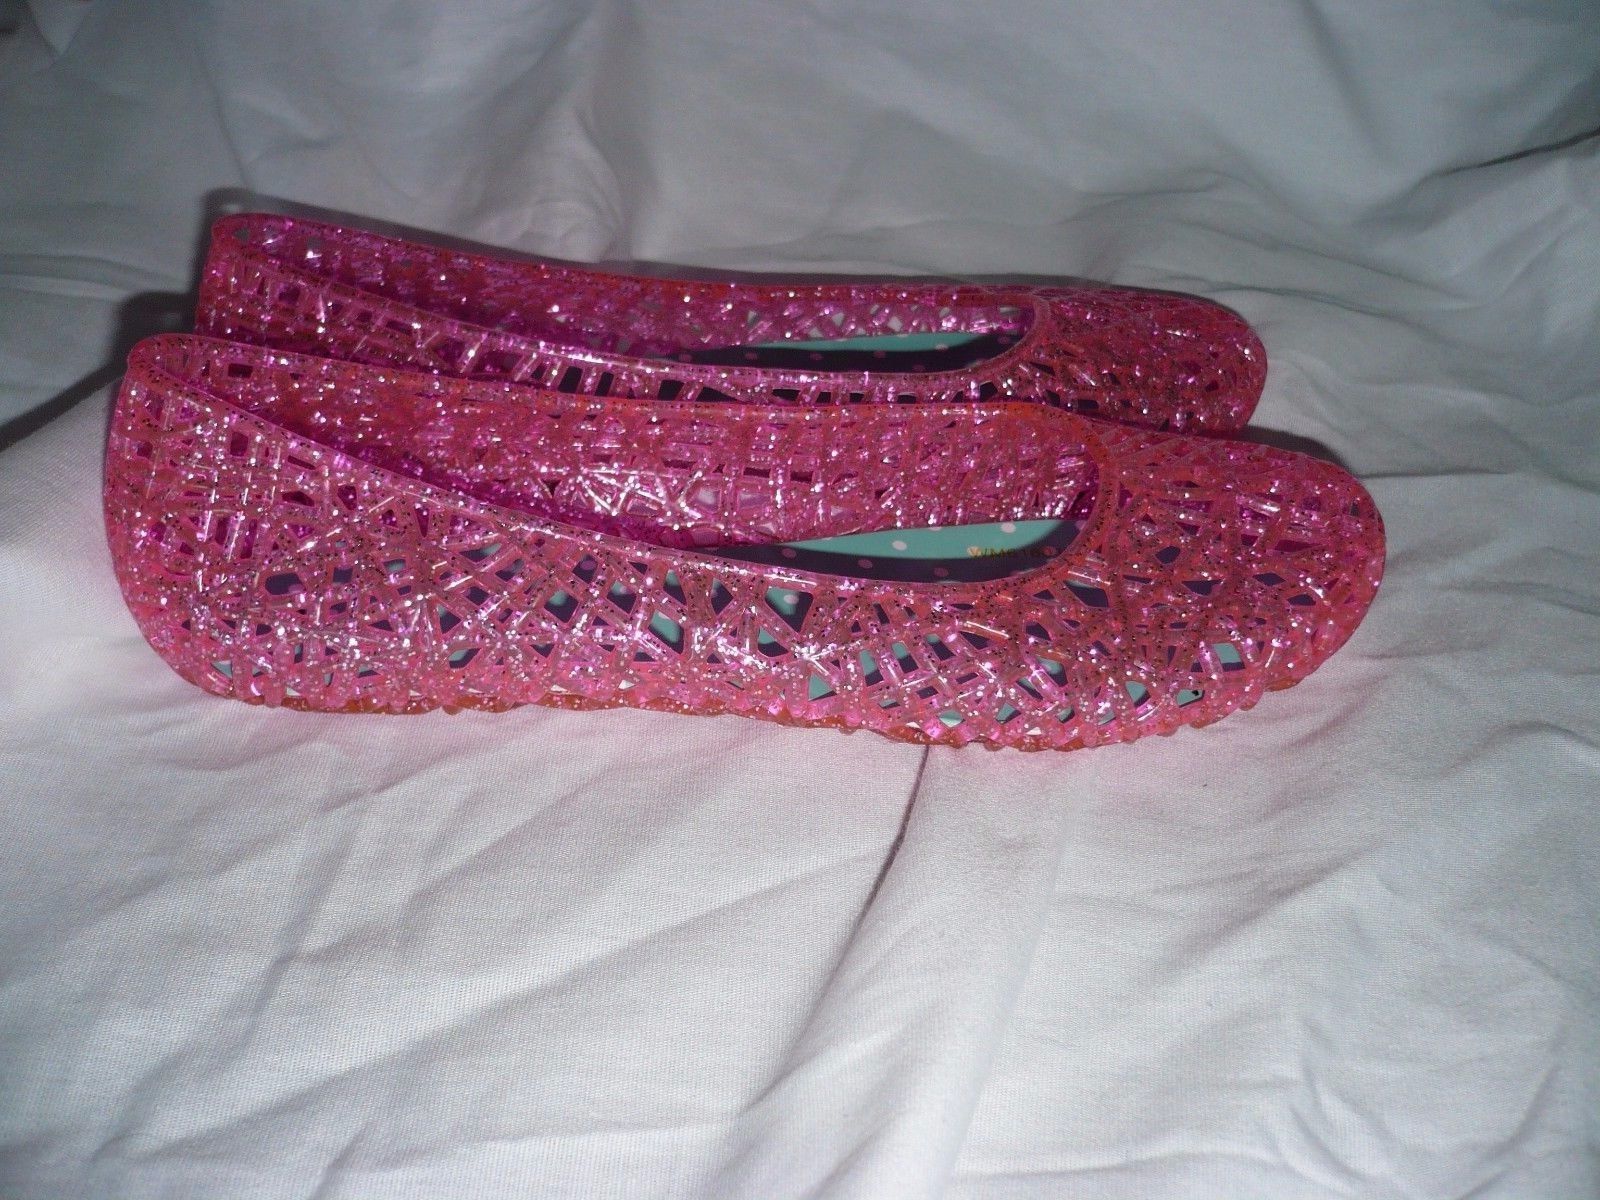 Details about   Girls Walmart Brand Jelly Ballet Flat Shoes Pink Glitter Size 3 NEW